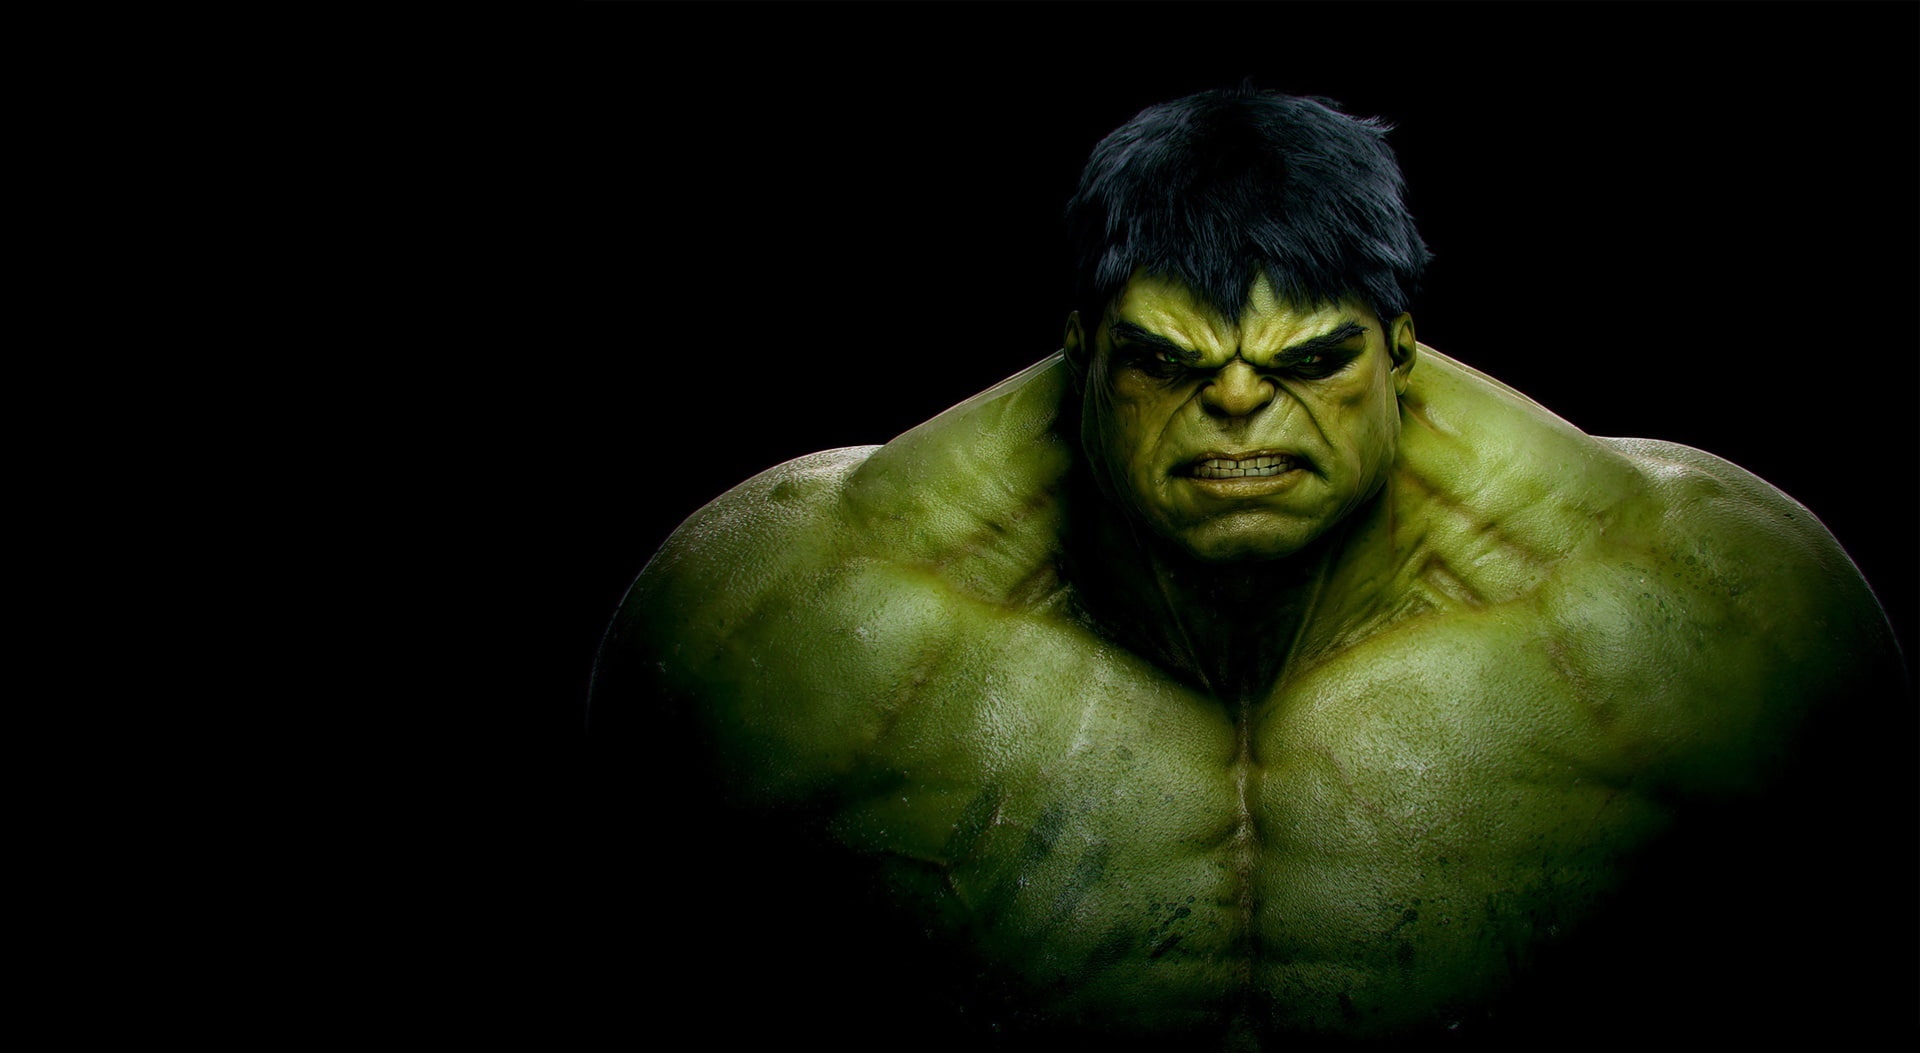 HULK SMASH, The Incredible Hulk wallpaper, Movies, marvel, black background